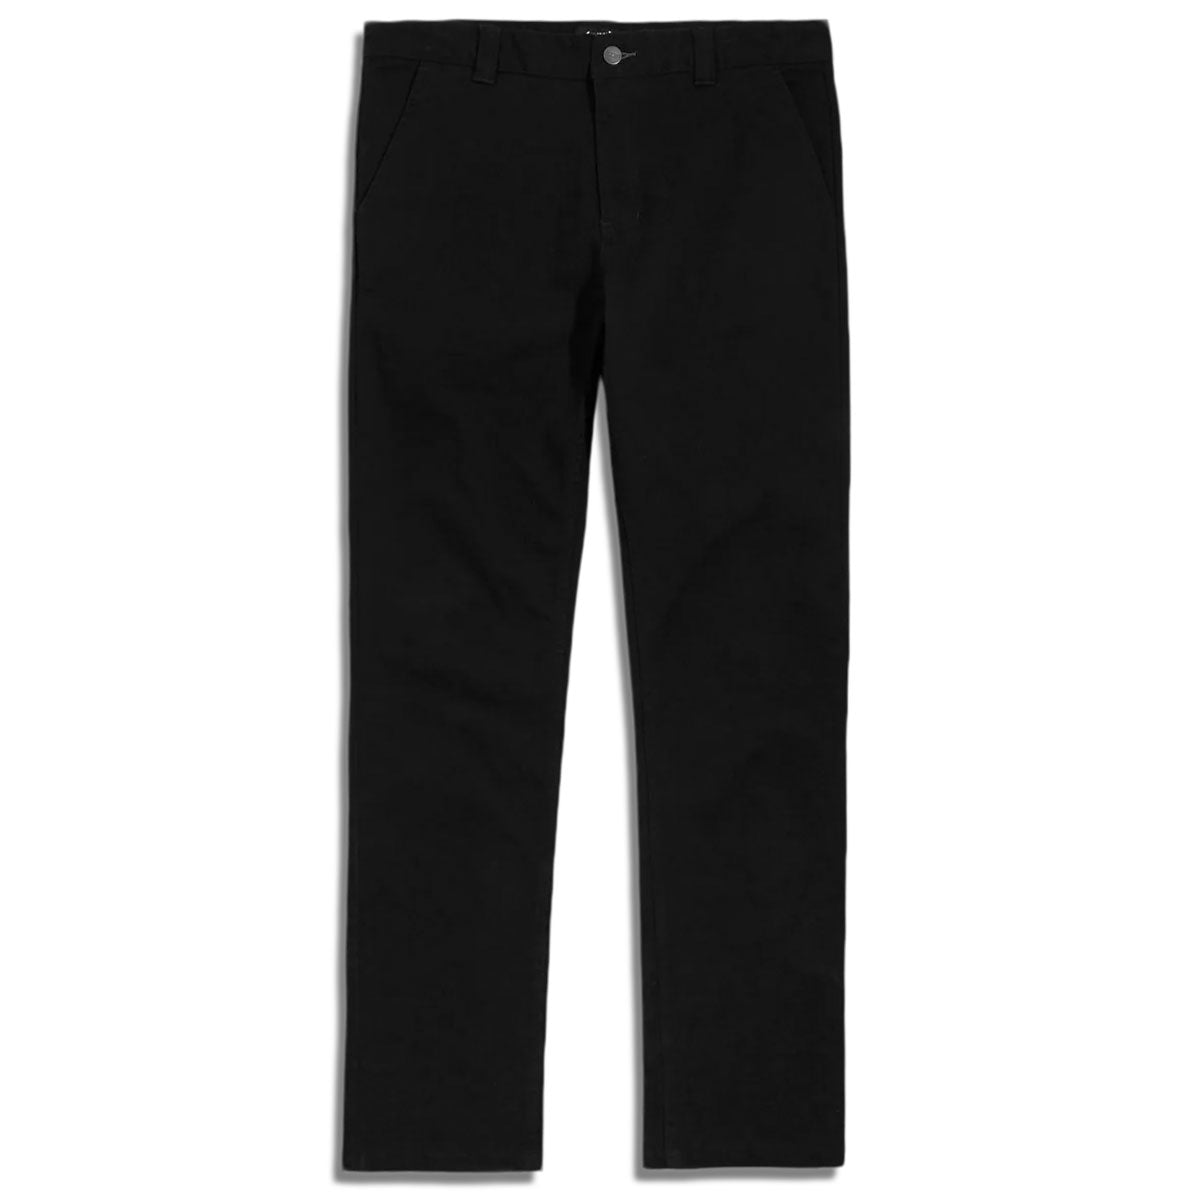 CCS Standard Plus Slim Chino Pants - Black image 5